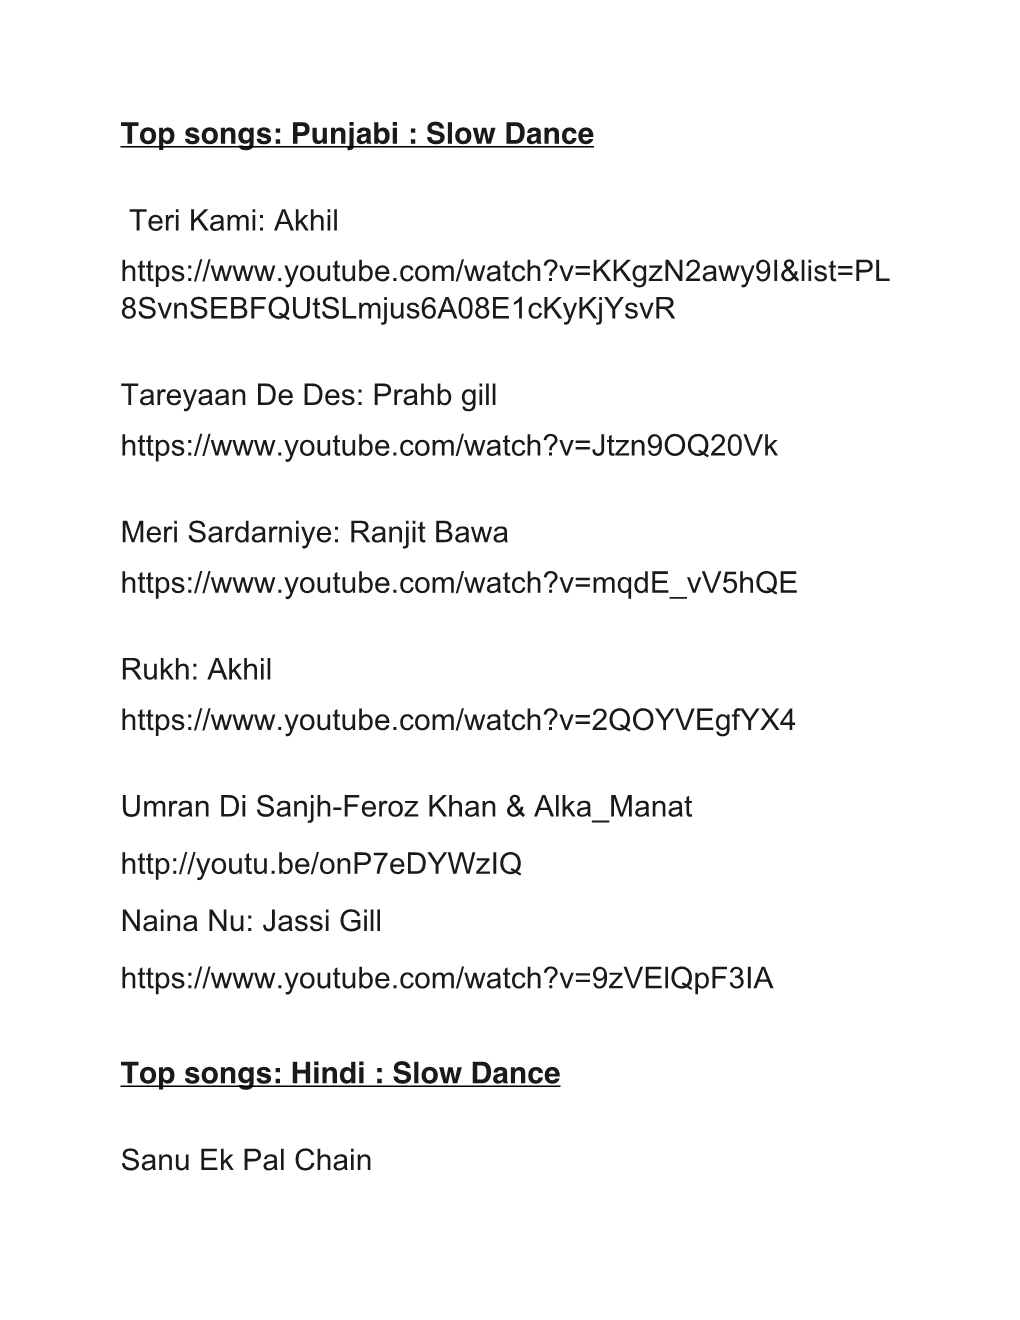 Top Songs: Punjabi : Slow Dance Teri Kami: Akhil Https